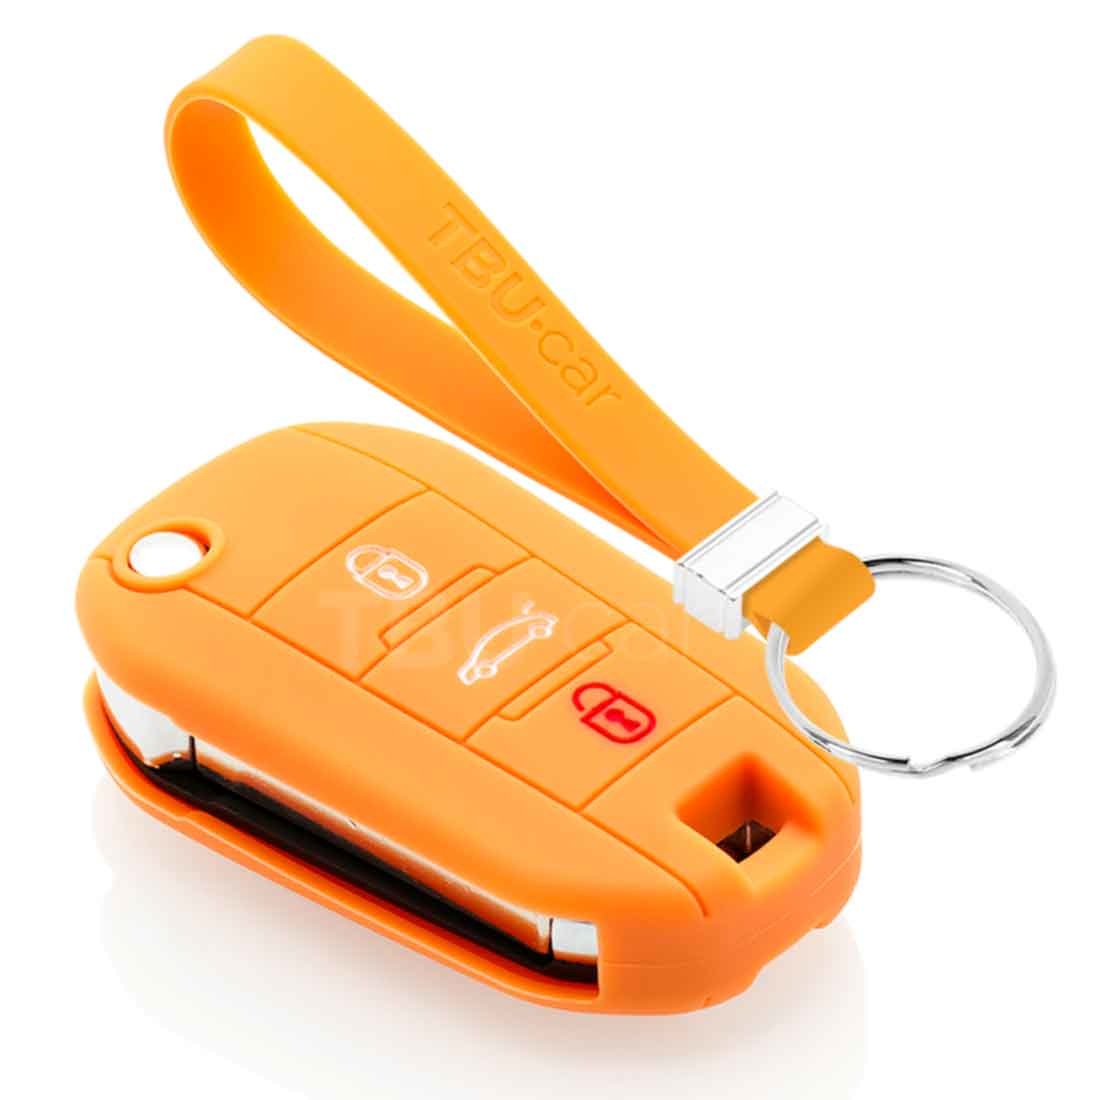 TBU car TBU car Autoschlüssel Hülle kompatibel mit Citroën 3 Tasten - Schutzhülle aus Silikon - Auto Schlüsselhülle Cover in Orange